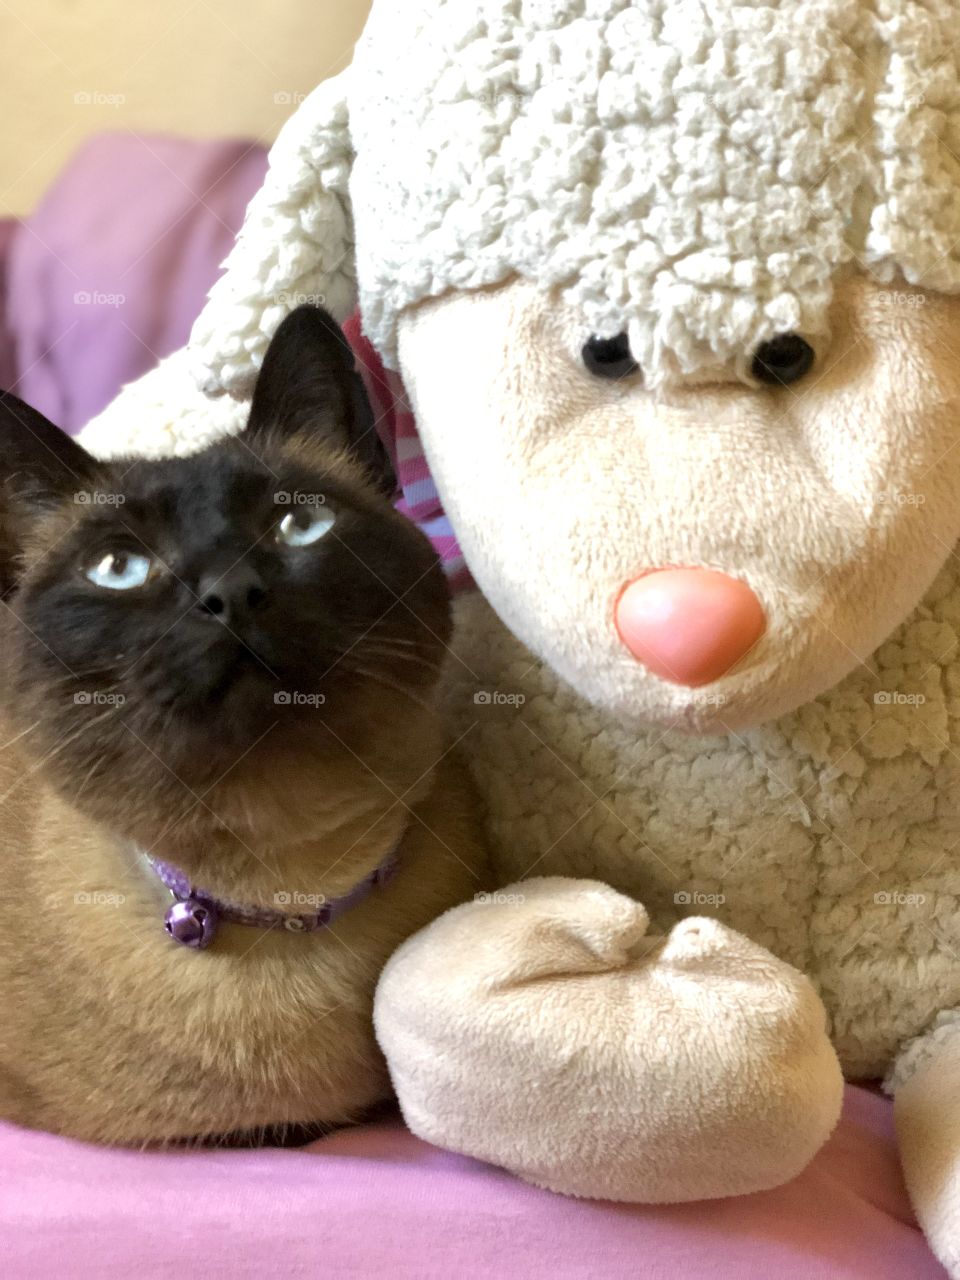 Cat and plush sheep!